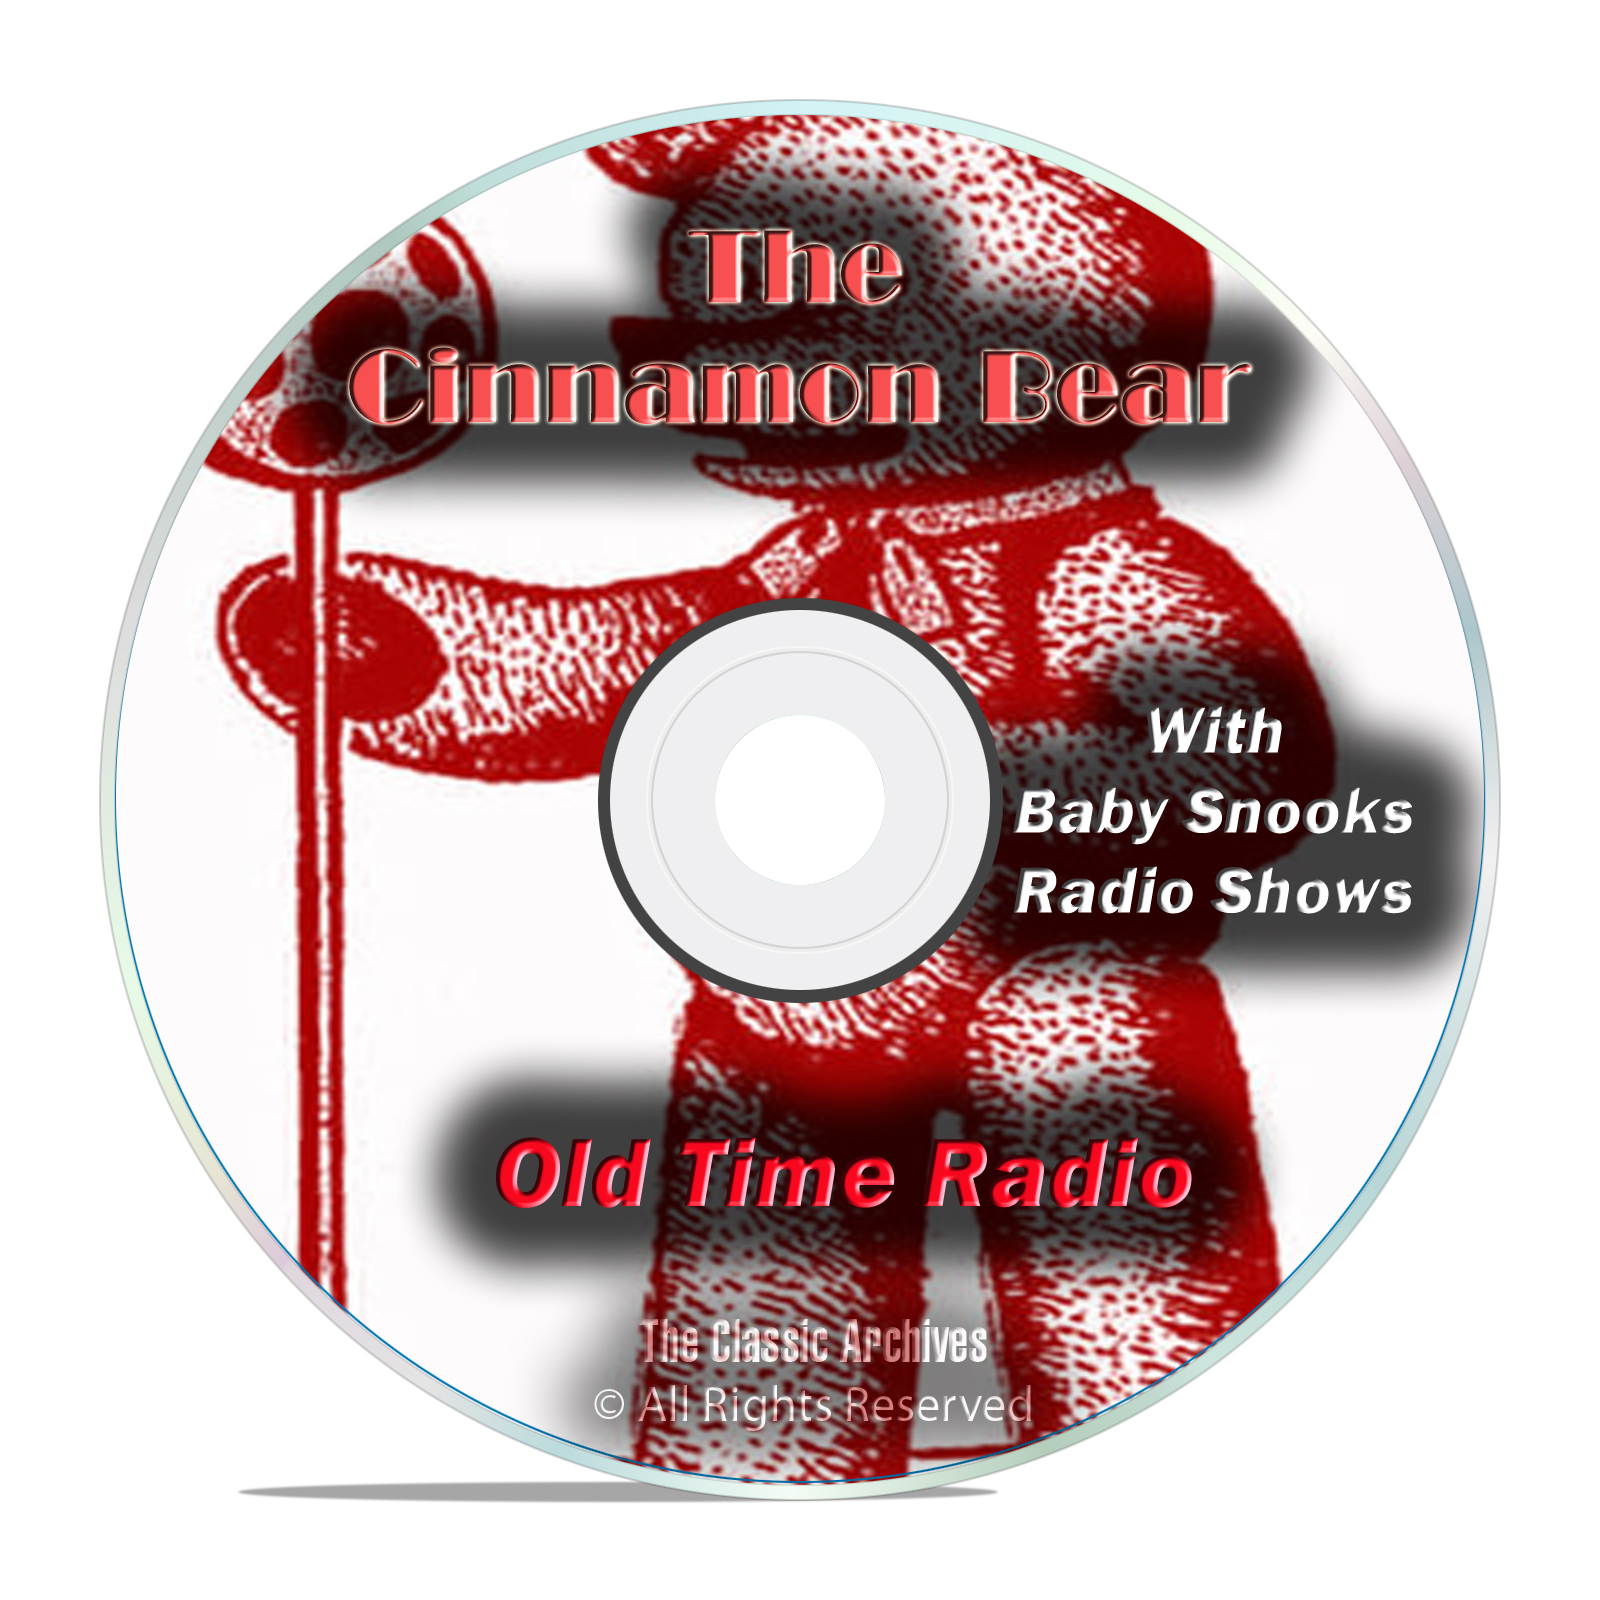 The Cinnamon Bear, 1,151 Old Time Radio Fiction Shows, OTR mp3 DVD